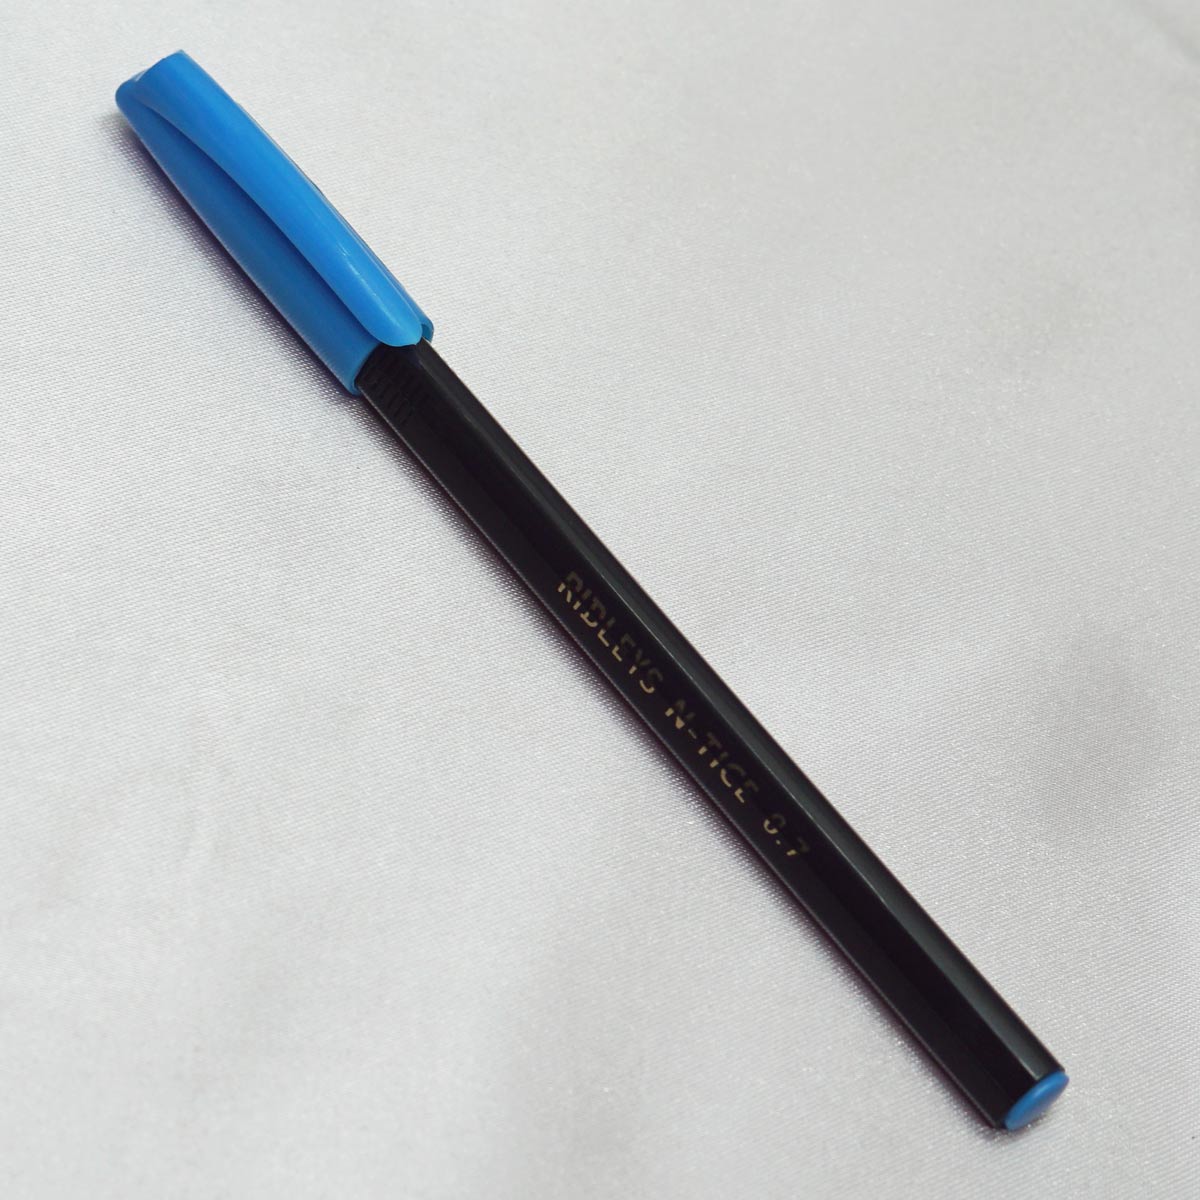 Redleys N-Tice Black Color Body With Blue Cap Blue Writing Fine Tip Cap Type Ball Pen SKU 22459